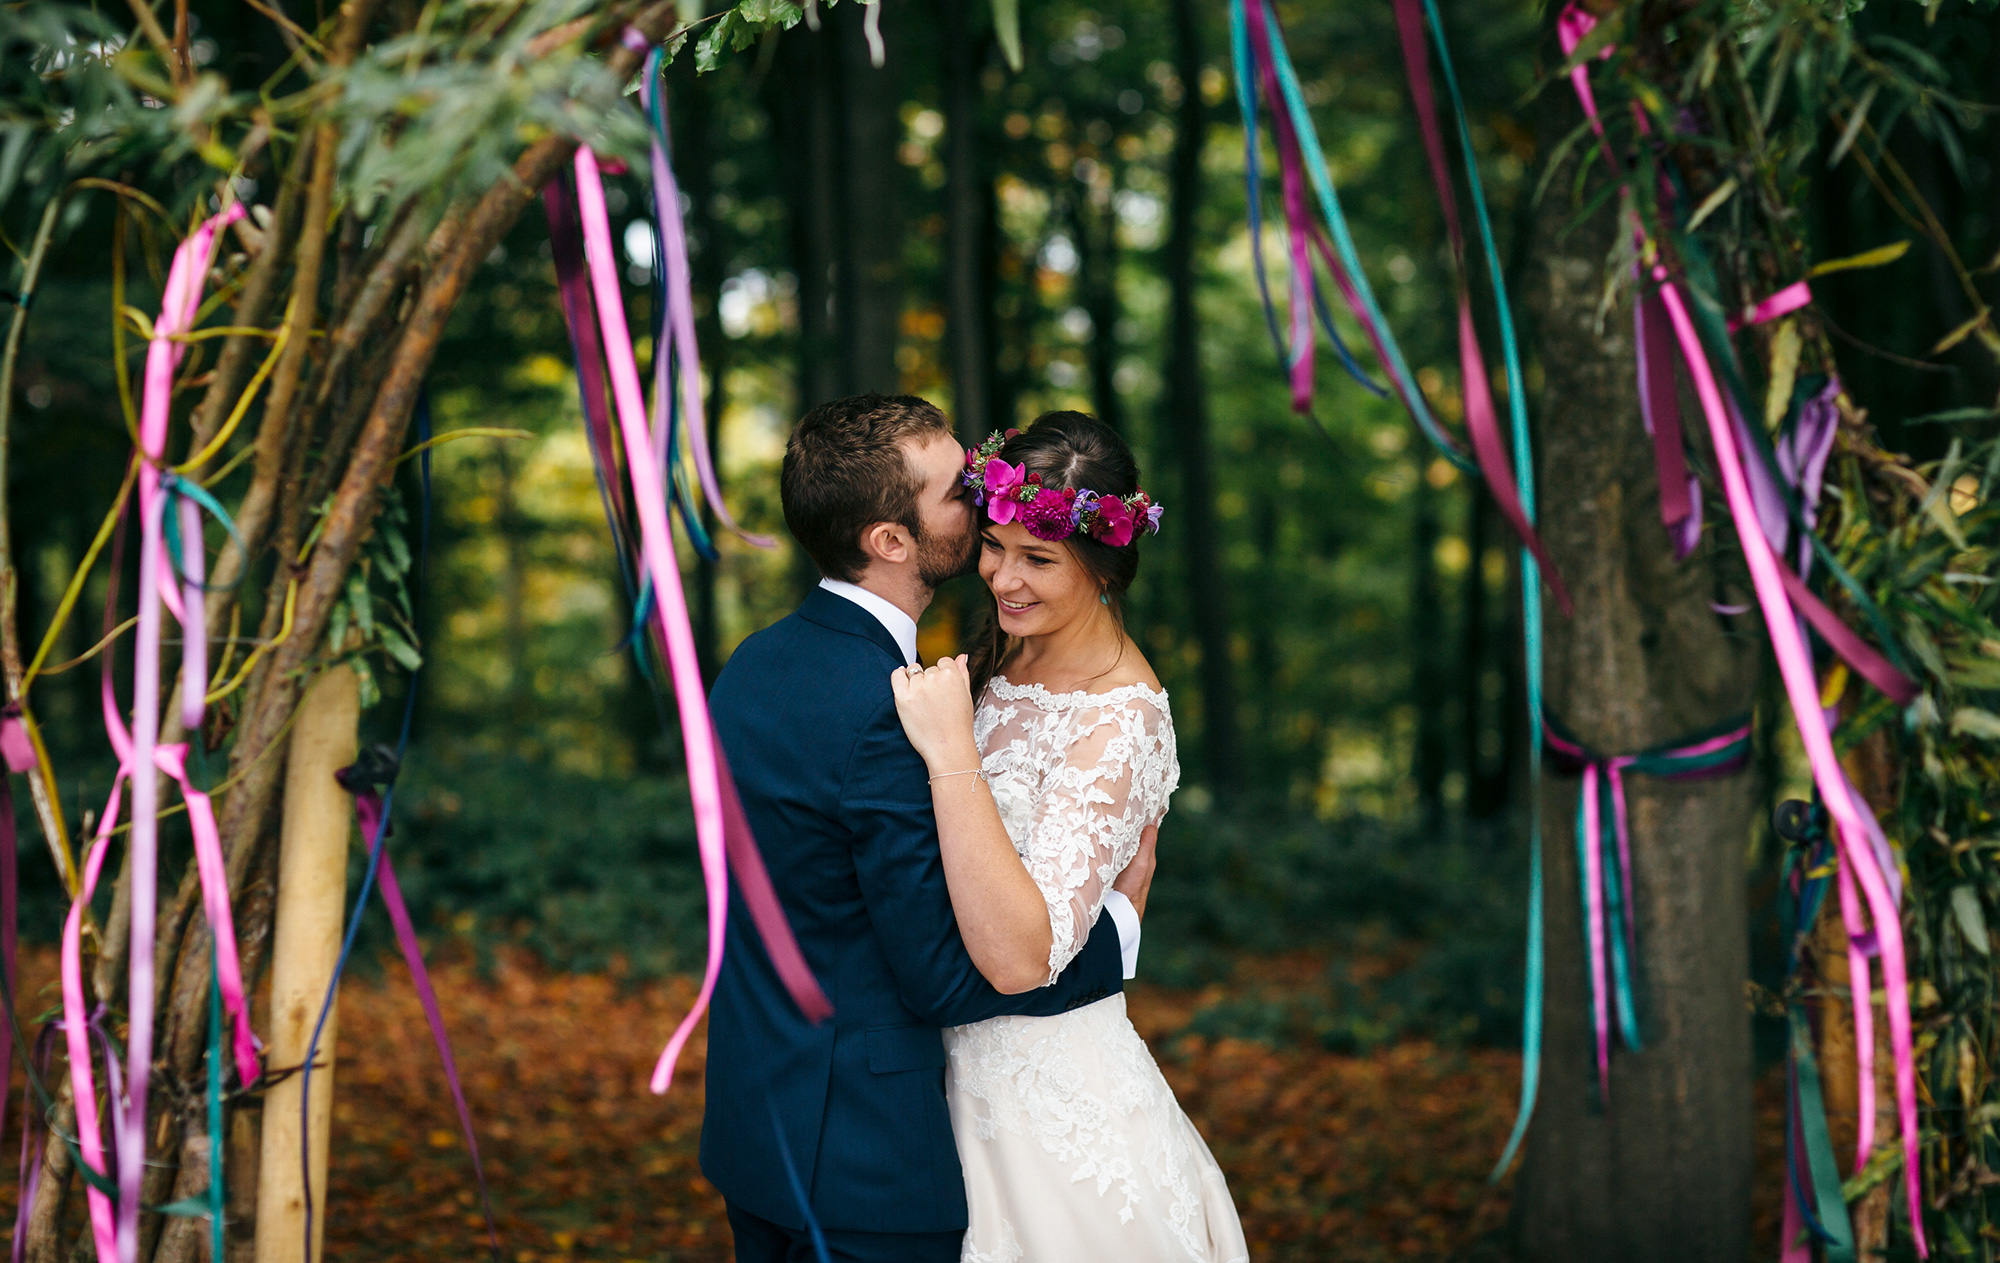 TOP TIPS FOR WONDERFUL WEDDING FLOWERS